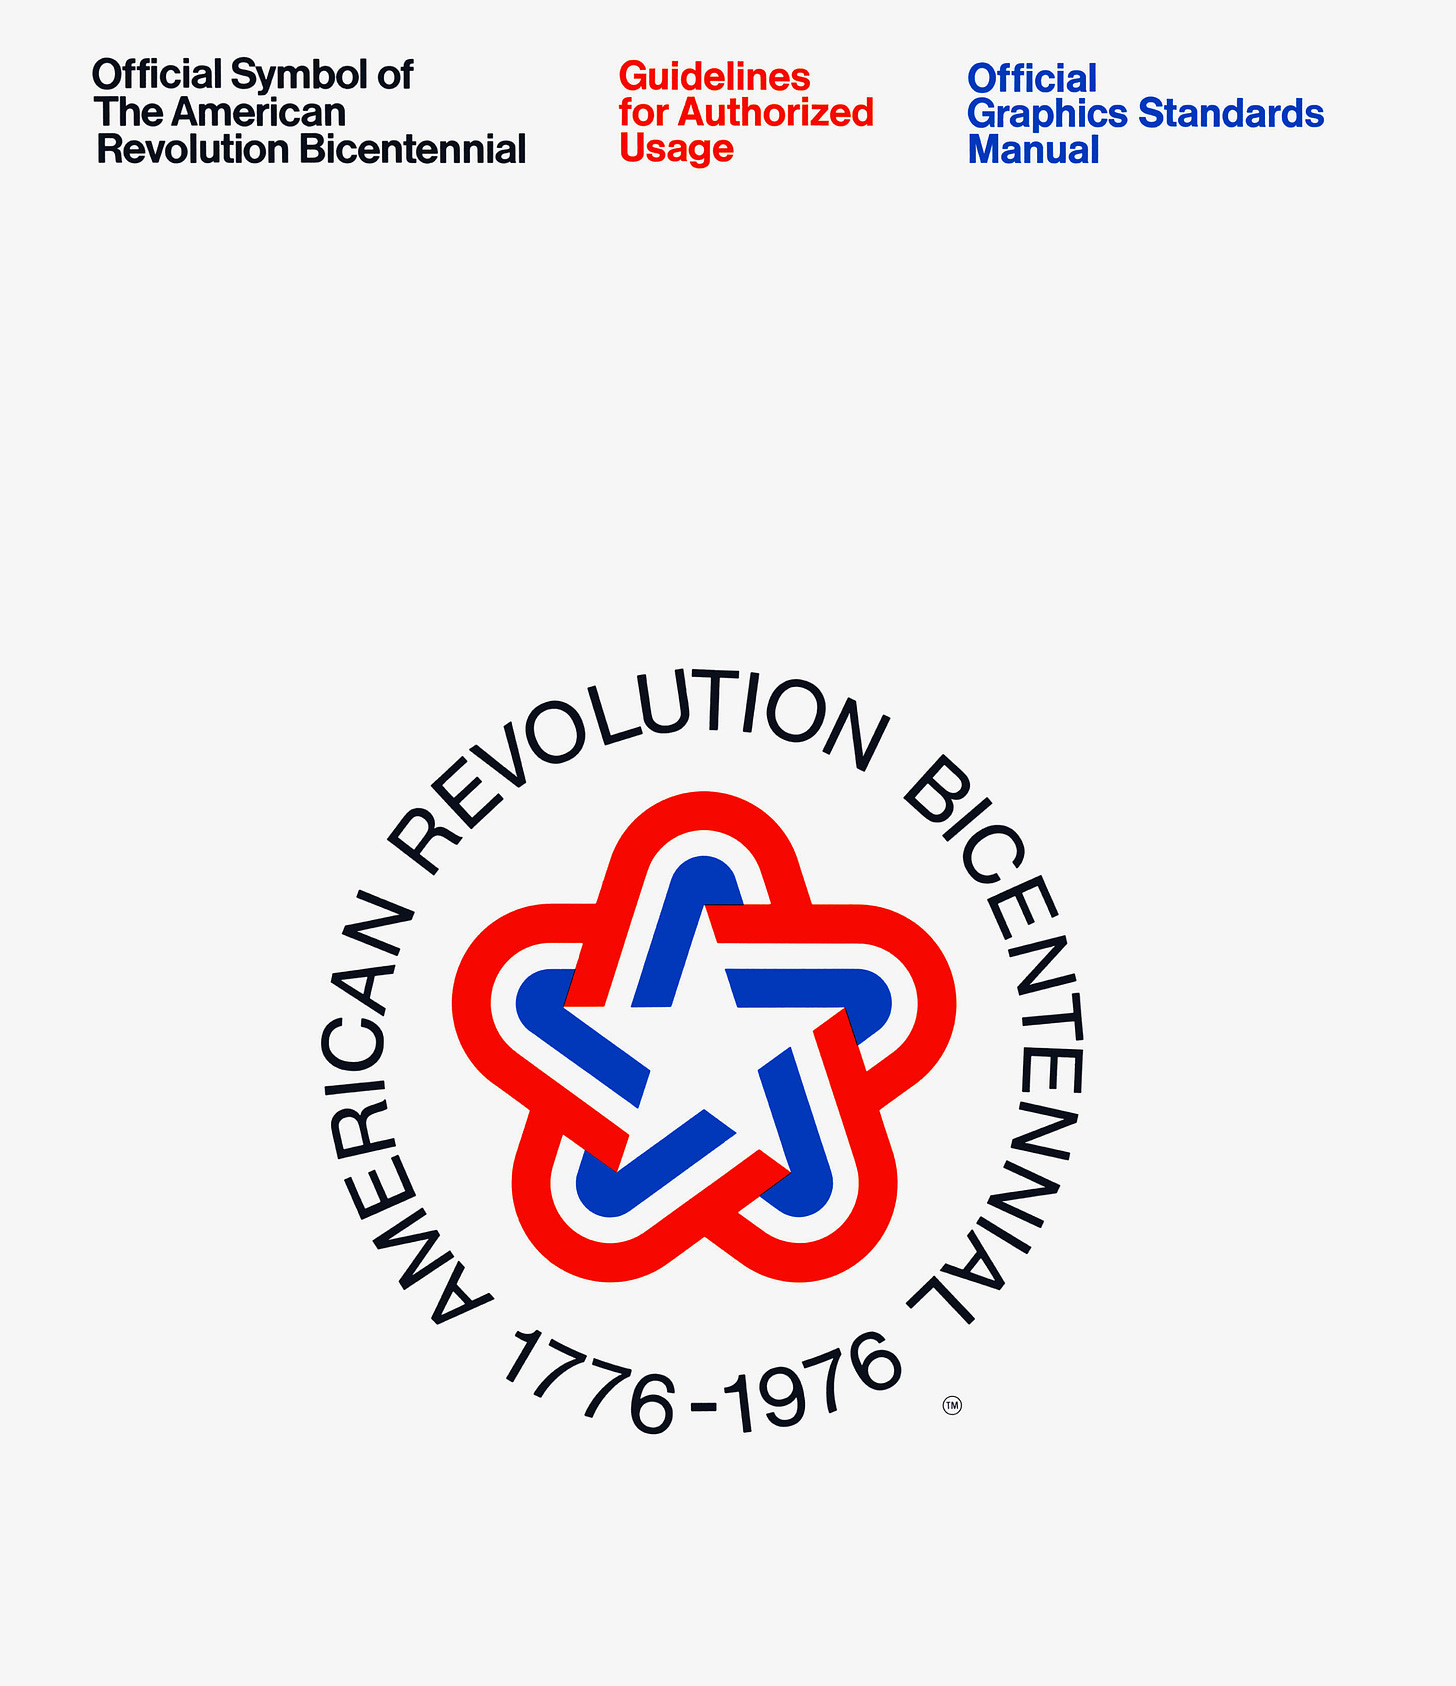 American Revolution Bicentennial Standards Manual